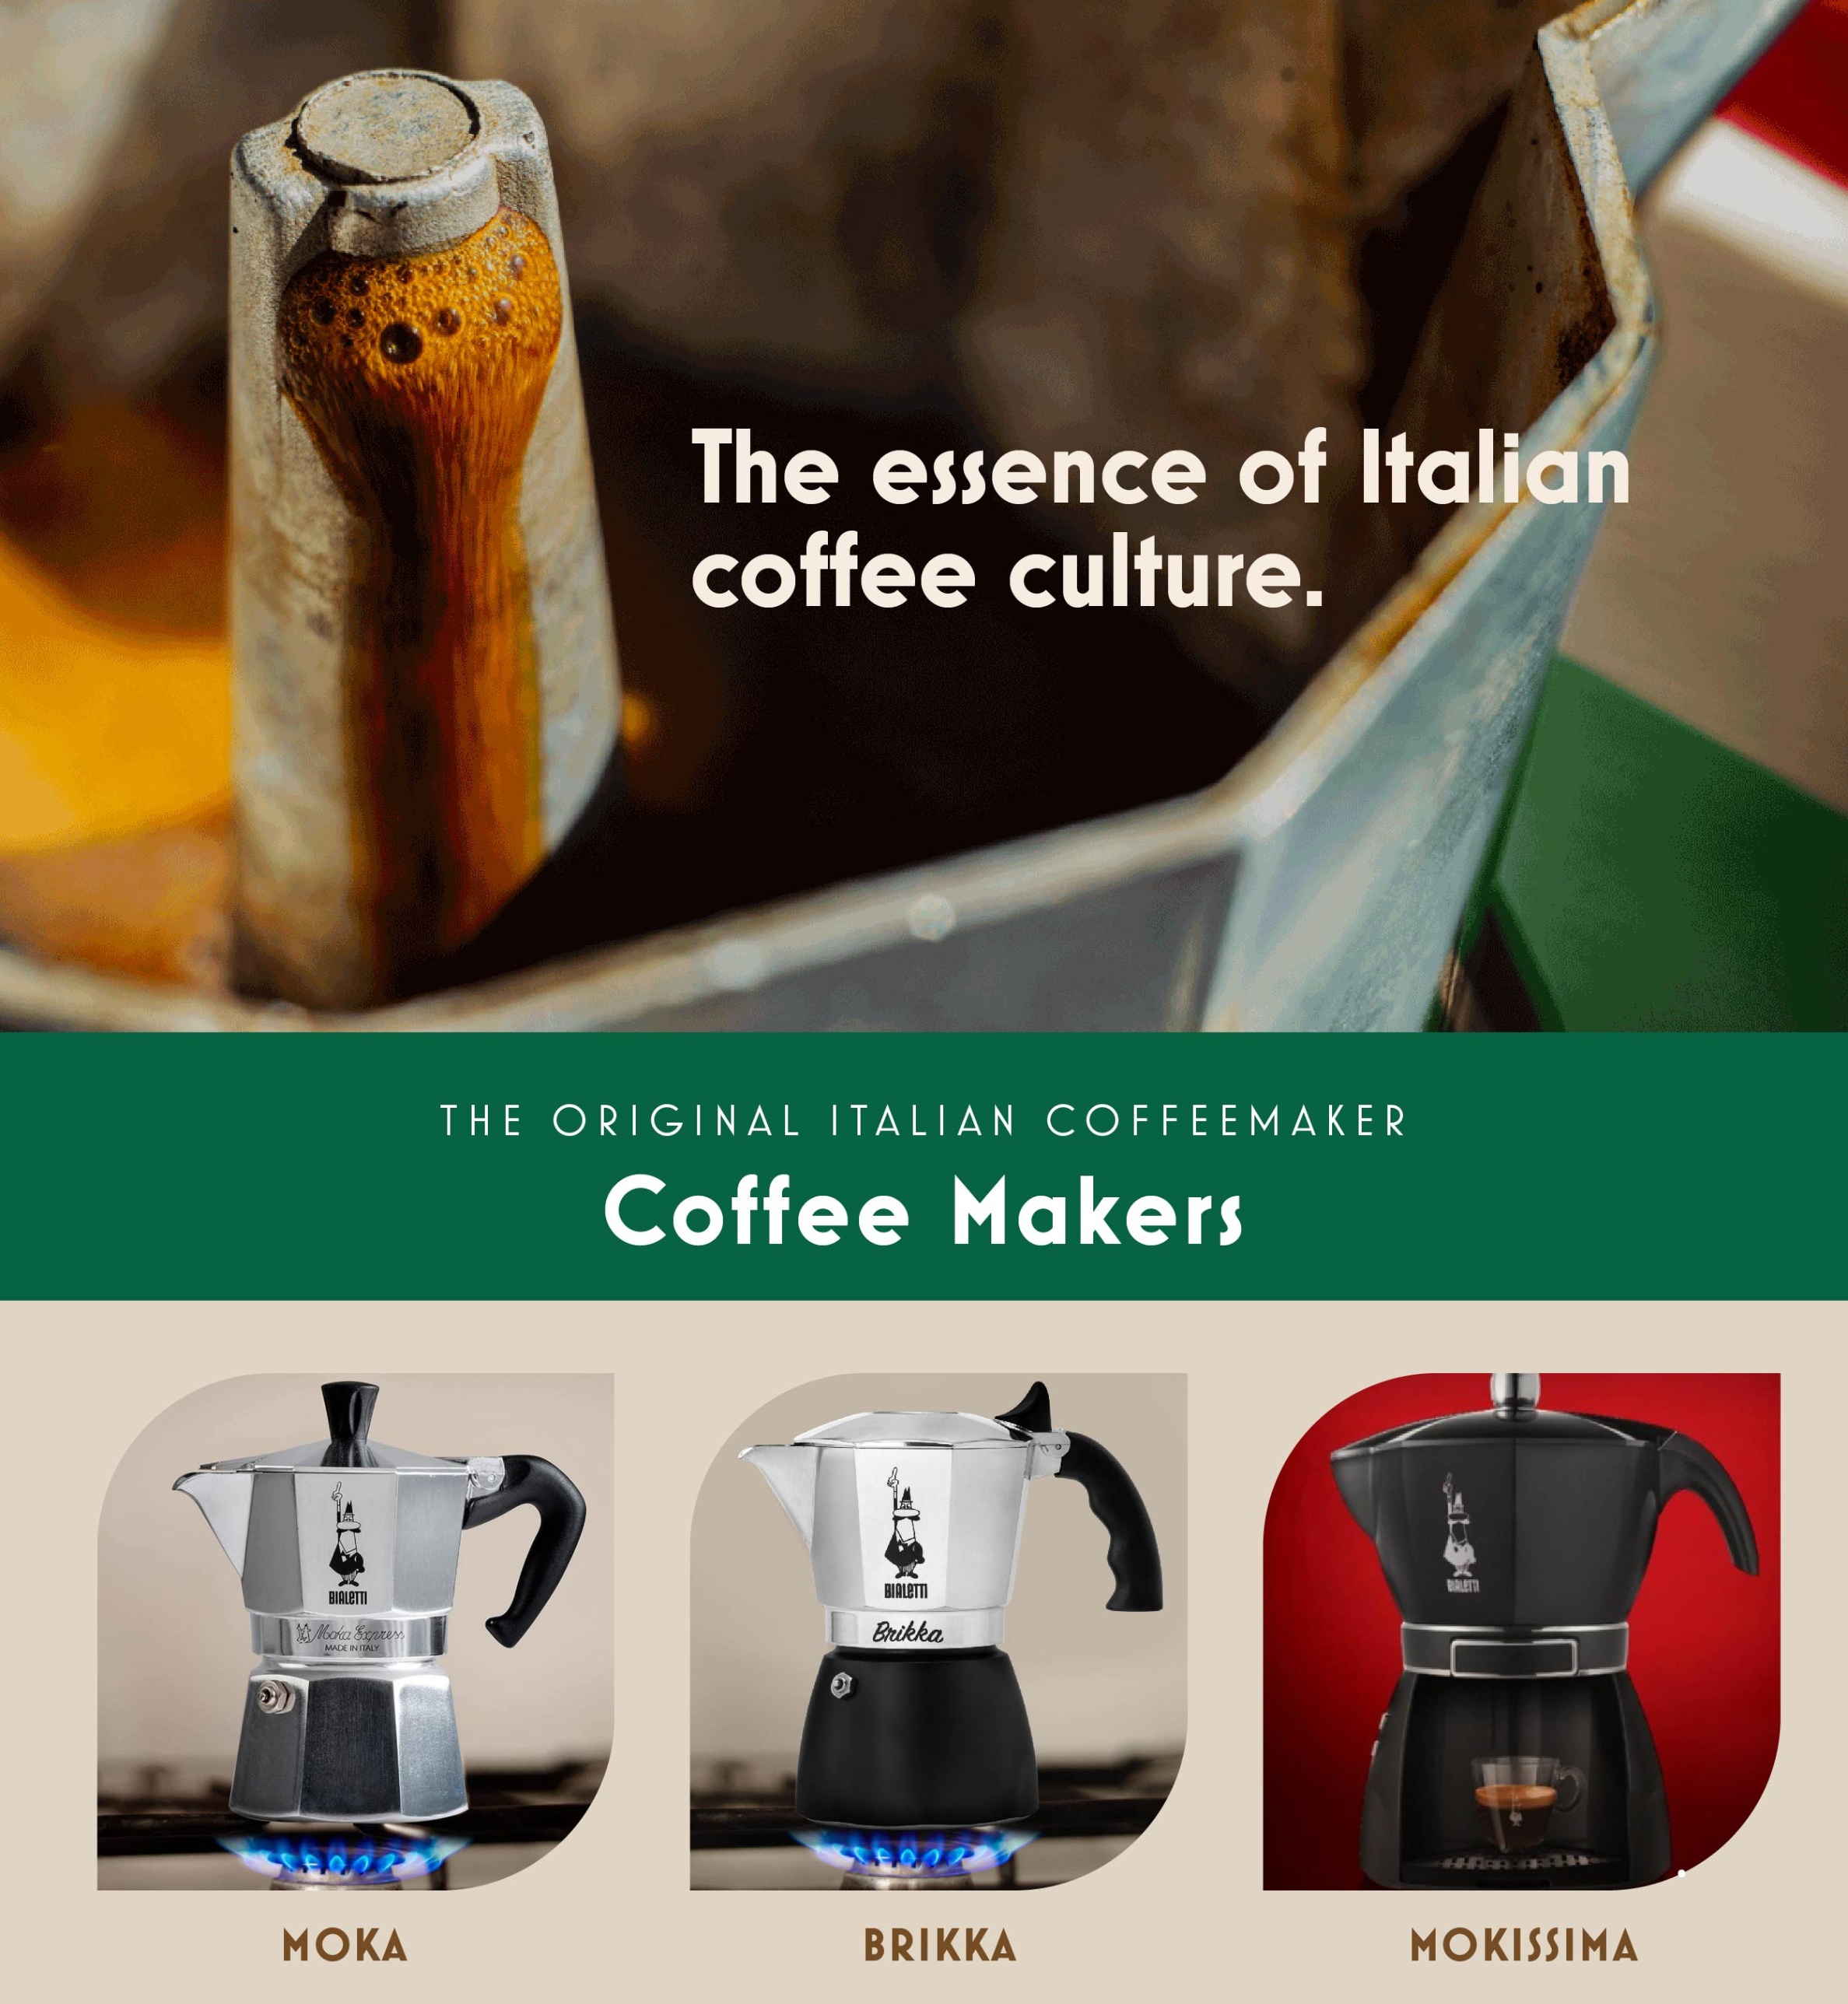 Bialetti Moka Timer 3tz - Electric coffee pot - Coffeedesk